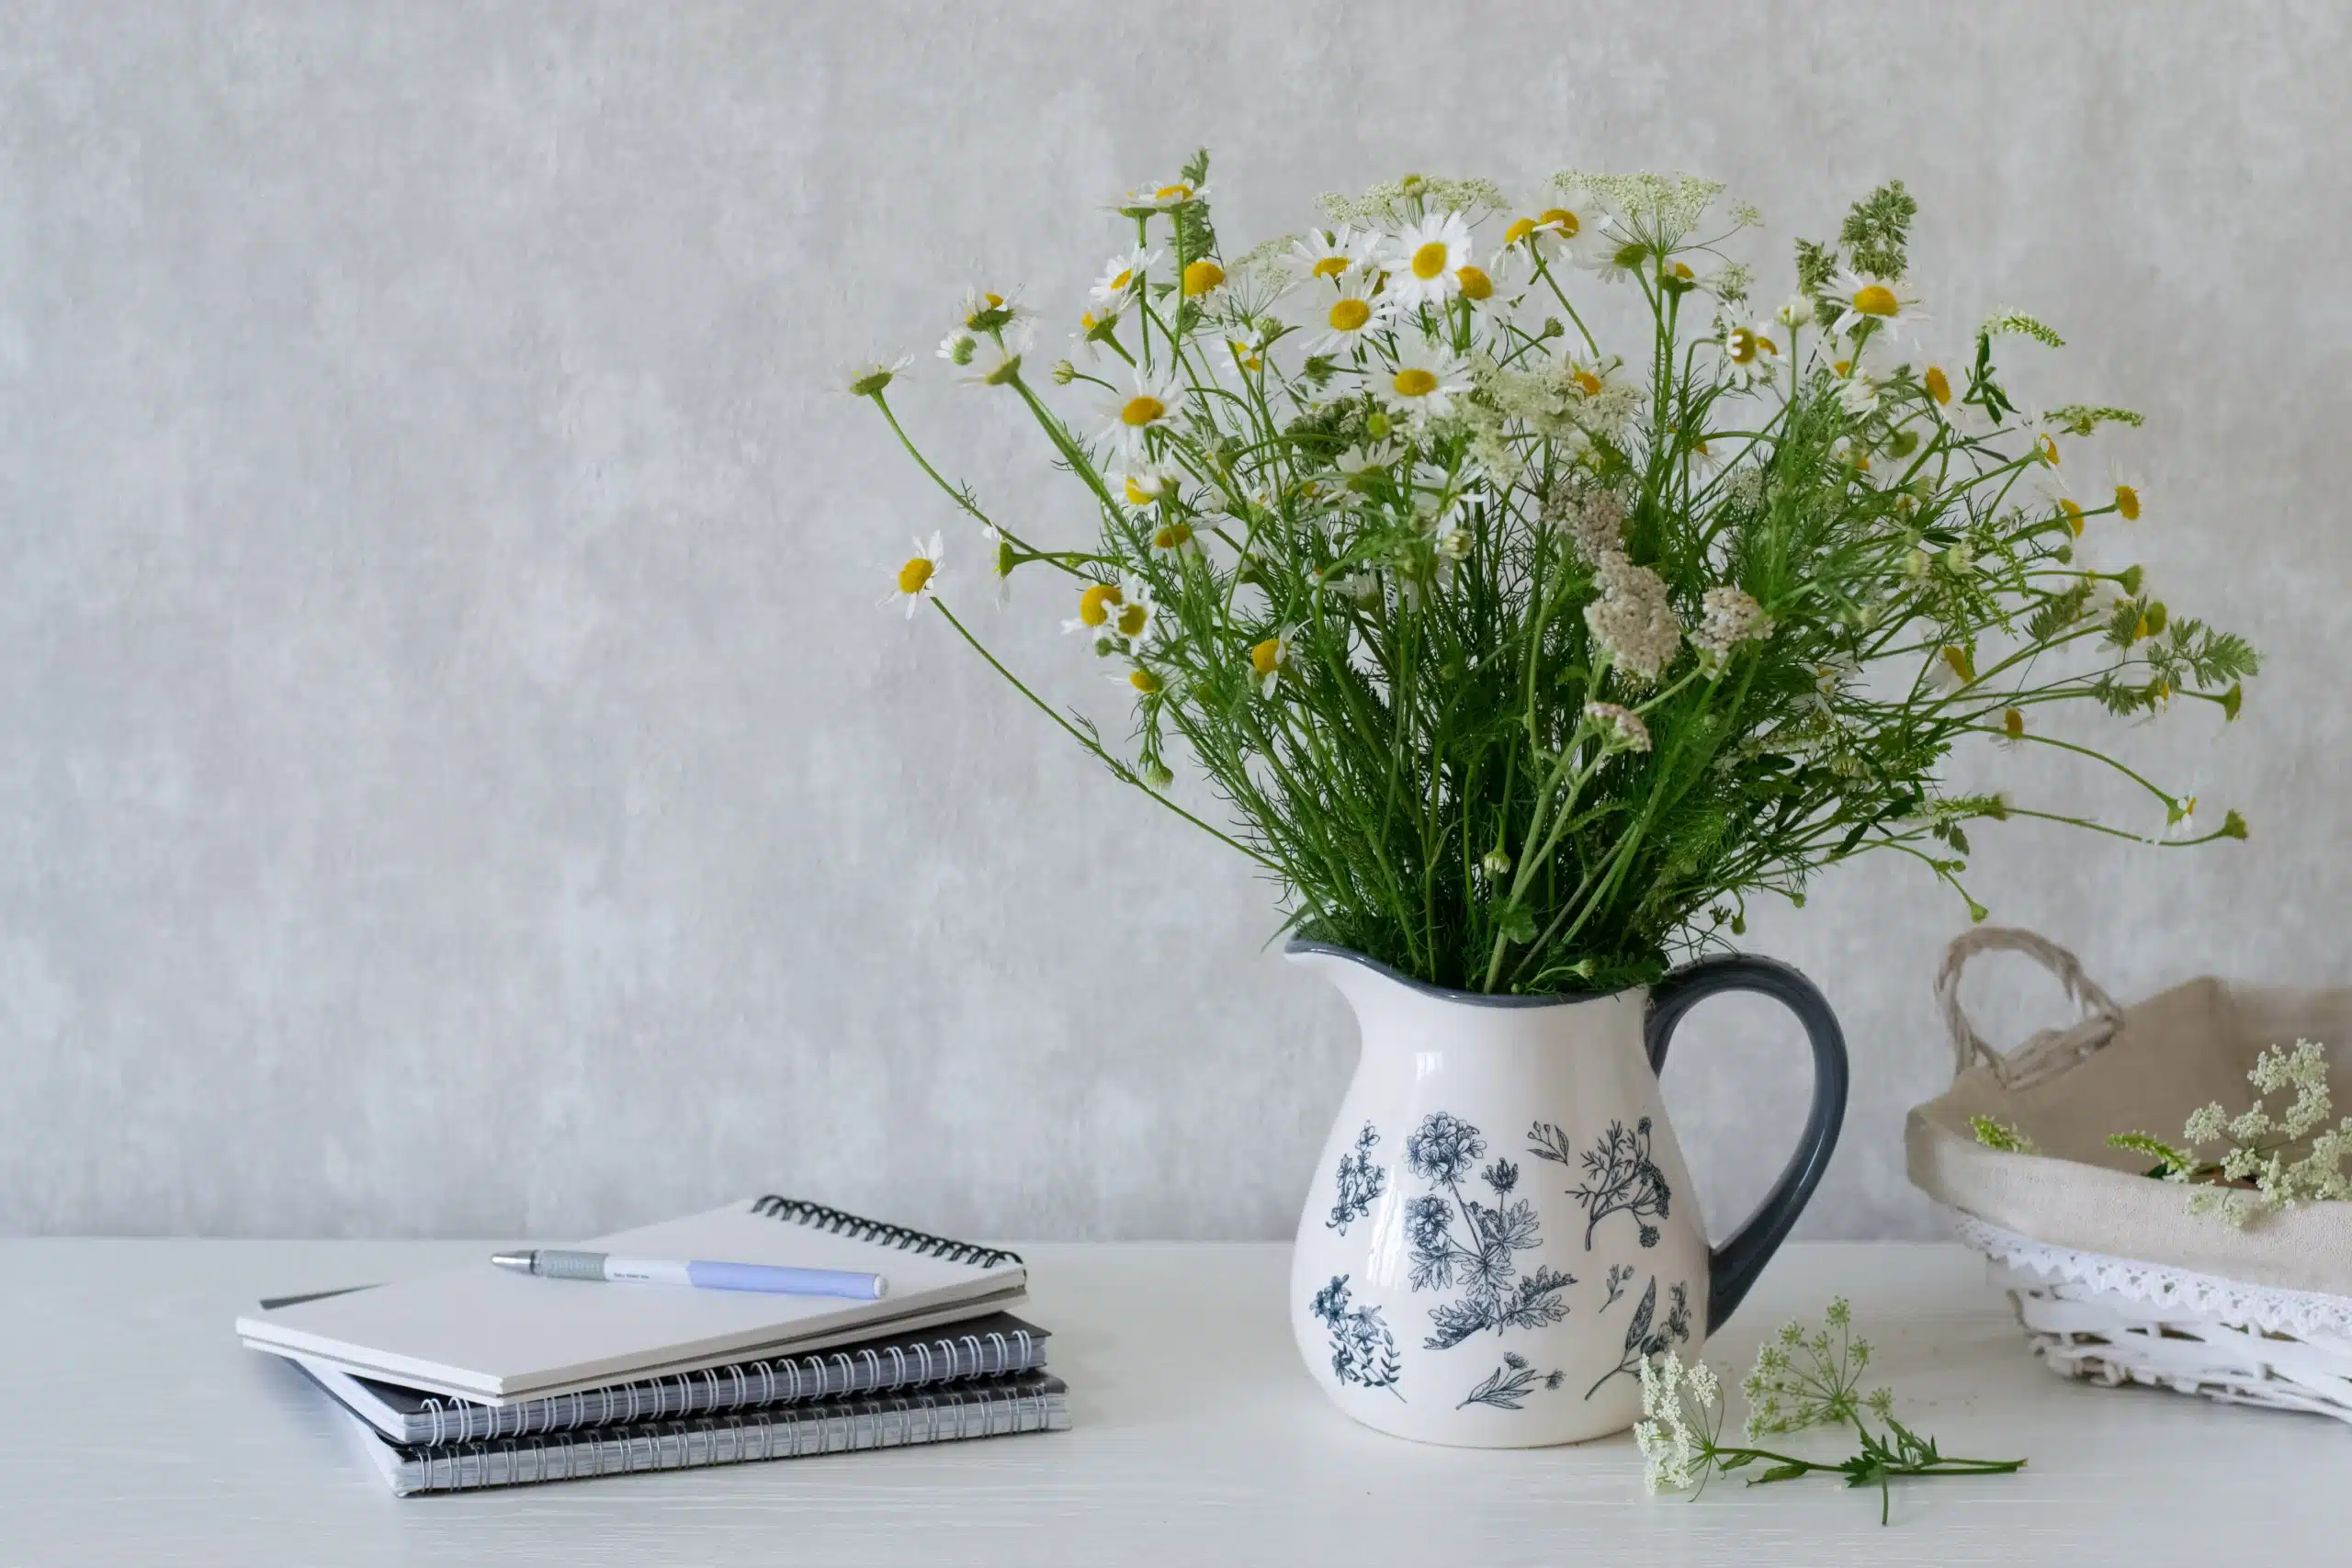 Vase of white daisies next to stacked notebooks on white desk.